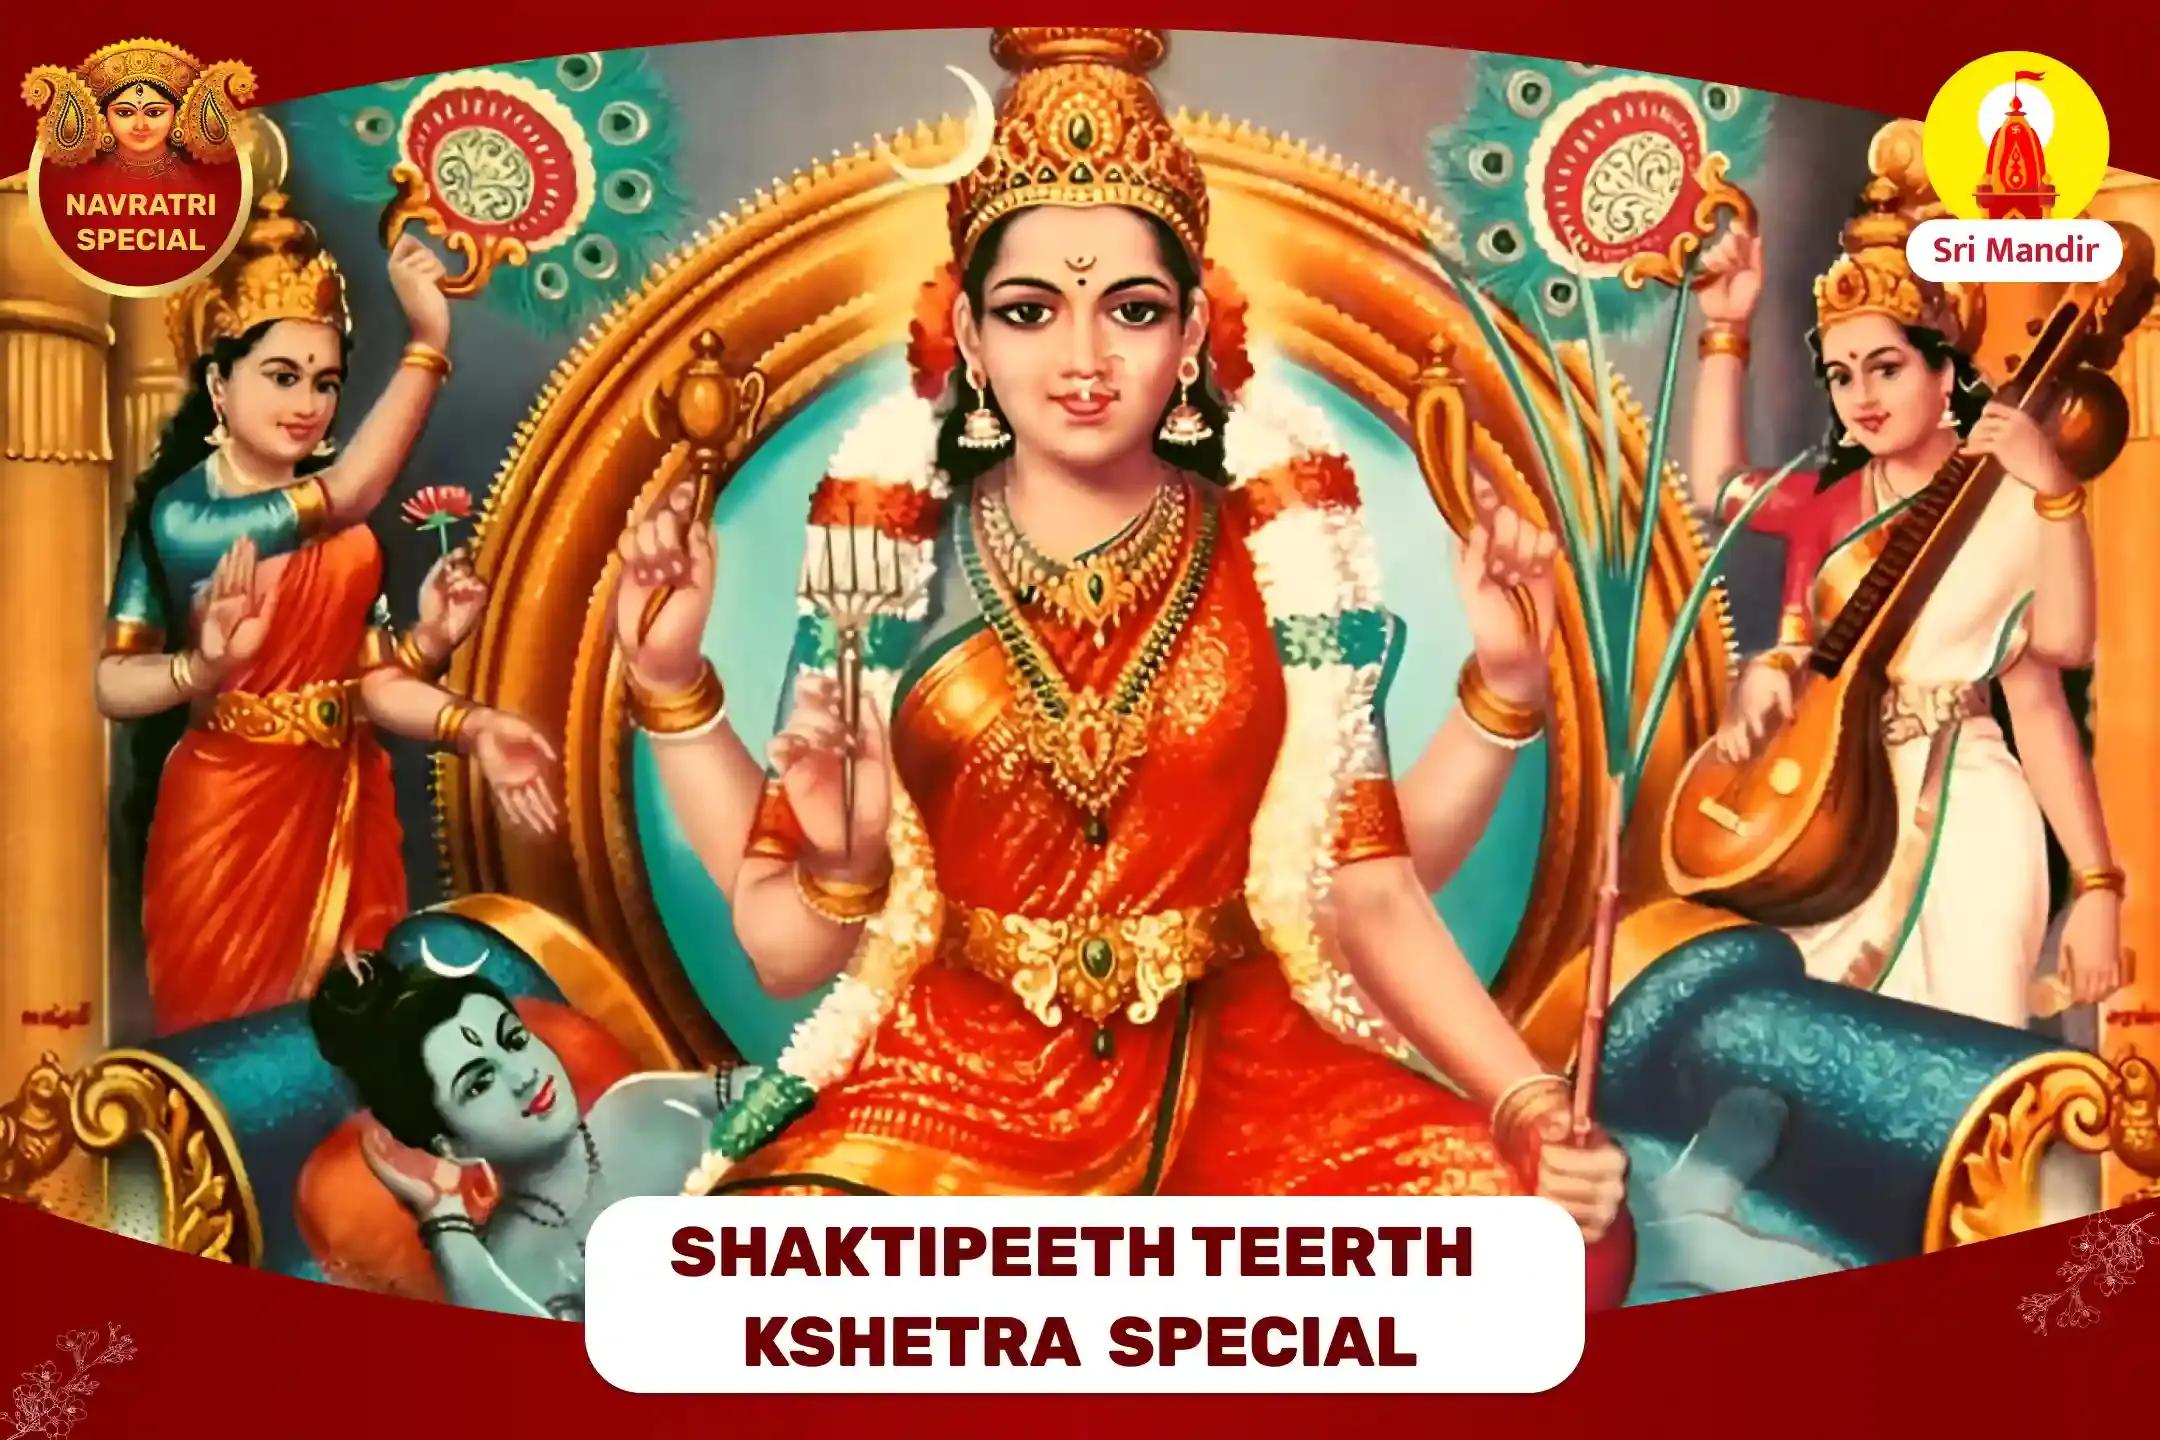 Shaktipeeth Teerth Kshetra Special Rajrajeshwari Tripura Sundari Maha Puja for Protection from Negative Energies, Evil Forces, and Adversities in Life